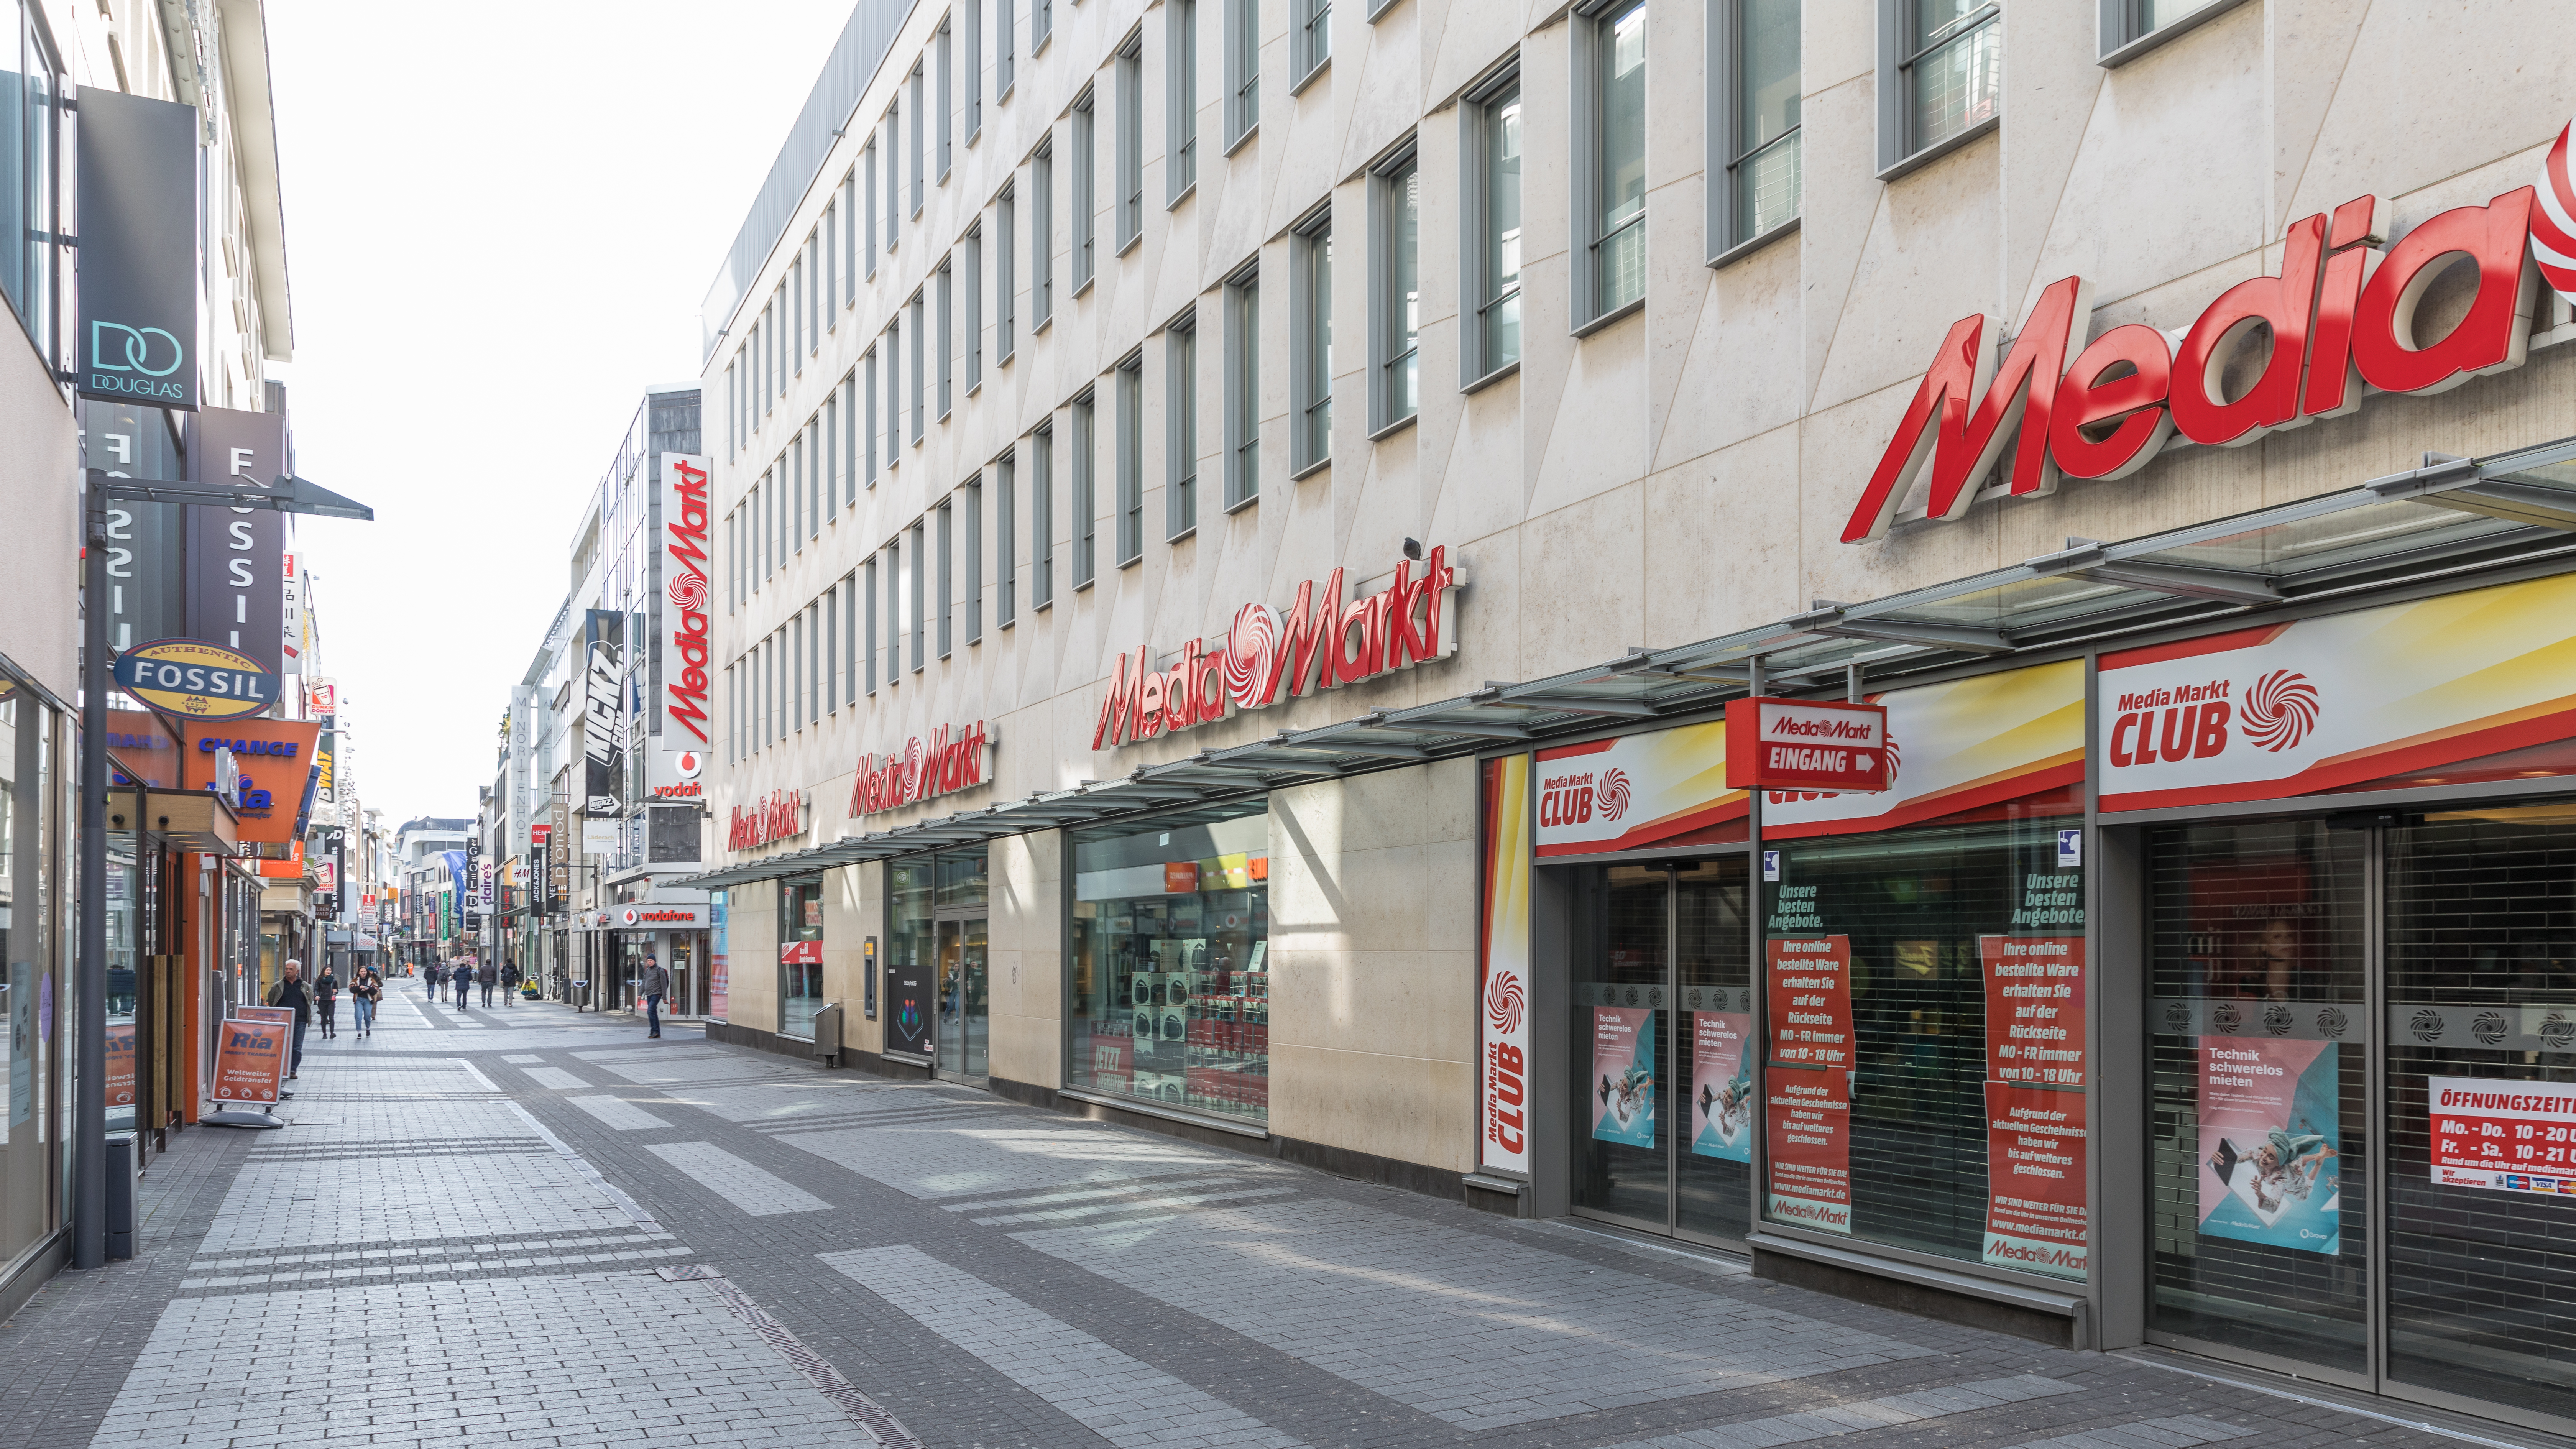 File:Media Markt Hohe Straße, - Samstagnachmittag während der COVID-19-Pandemie-5861.jpg Wikimedia Commons